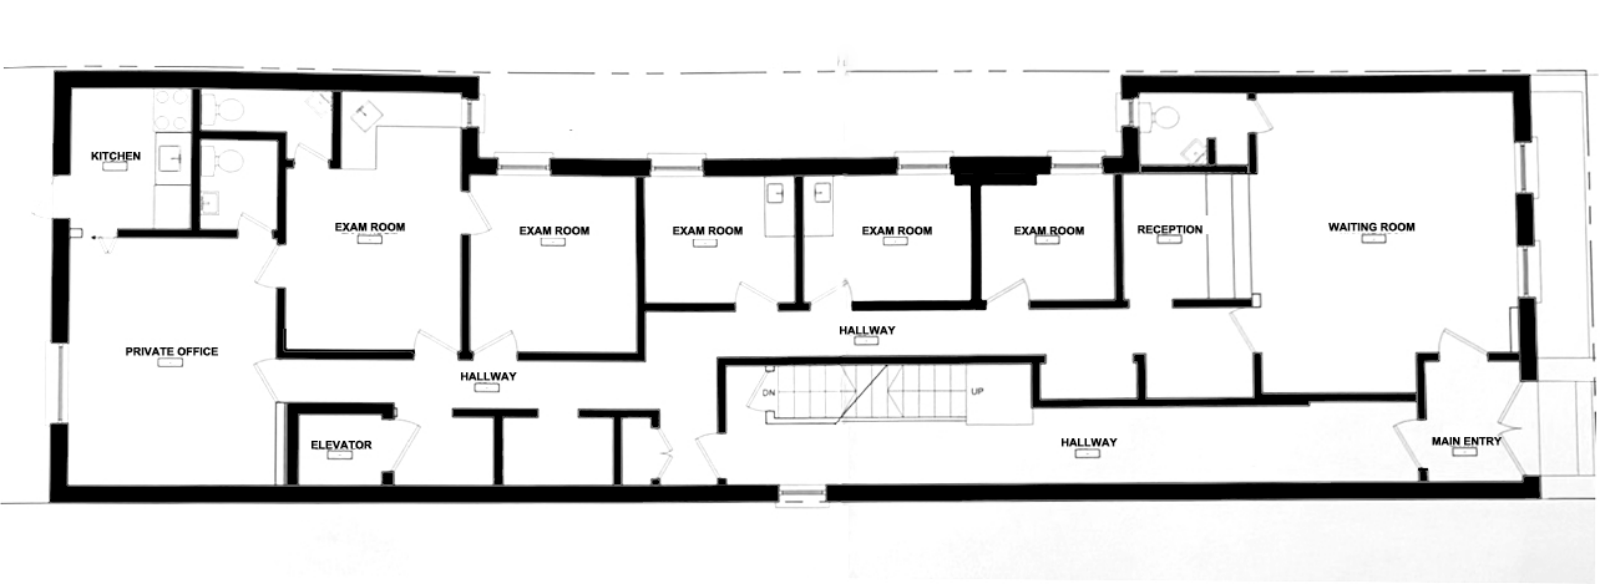 Floorplan for 153 East 88th Street, MEDICAL